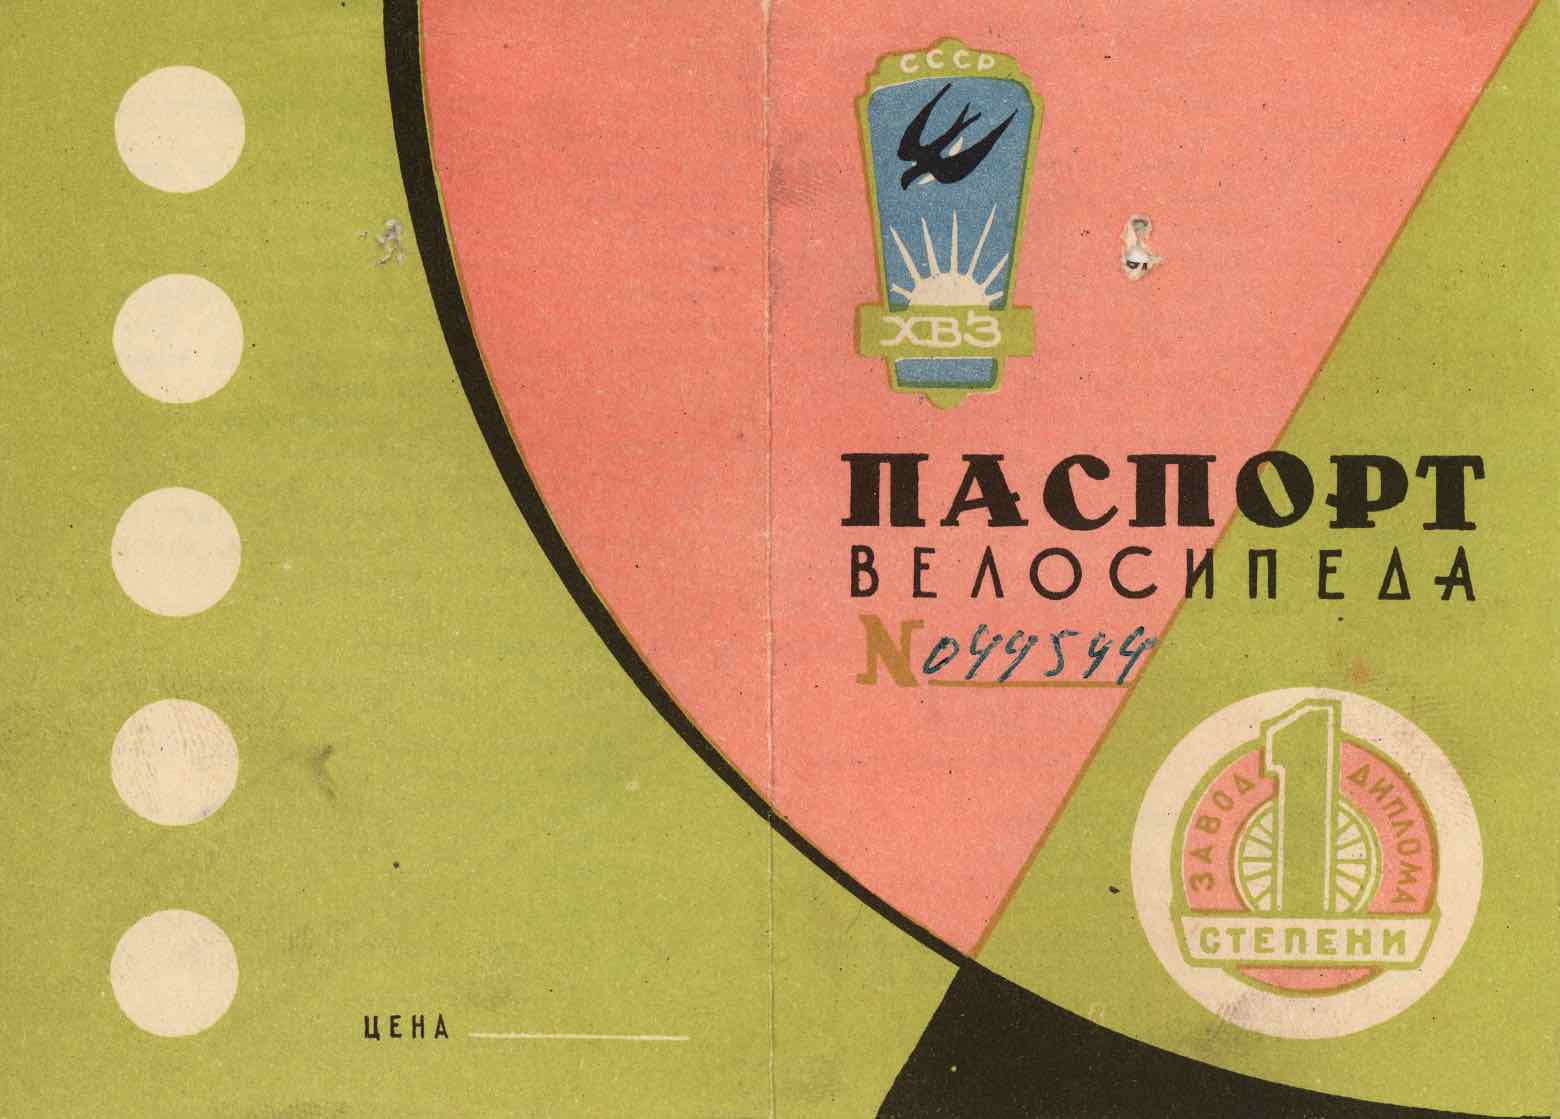 Kharkov - Pasport Velocipeda B-37 scan 1 main image